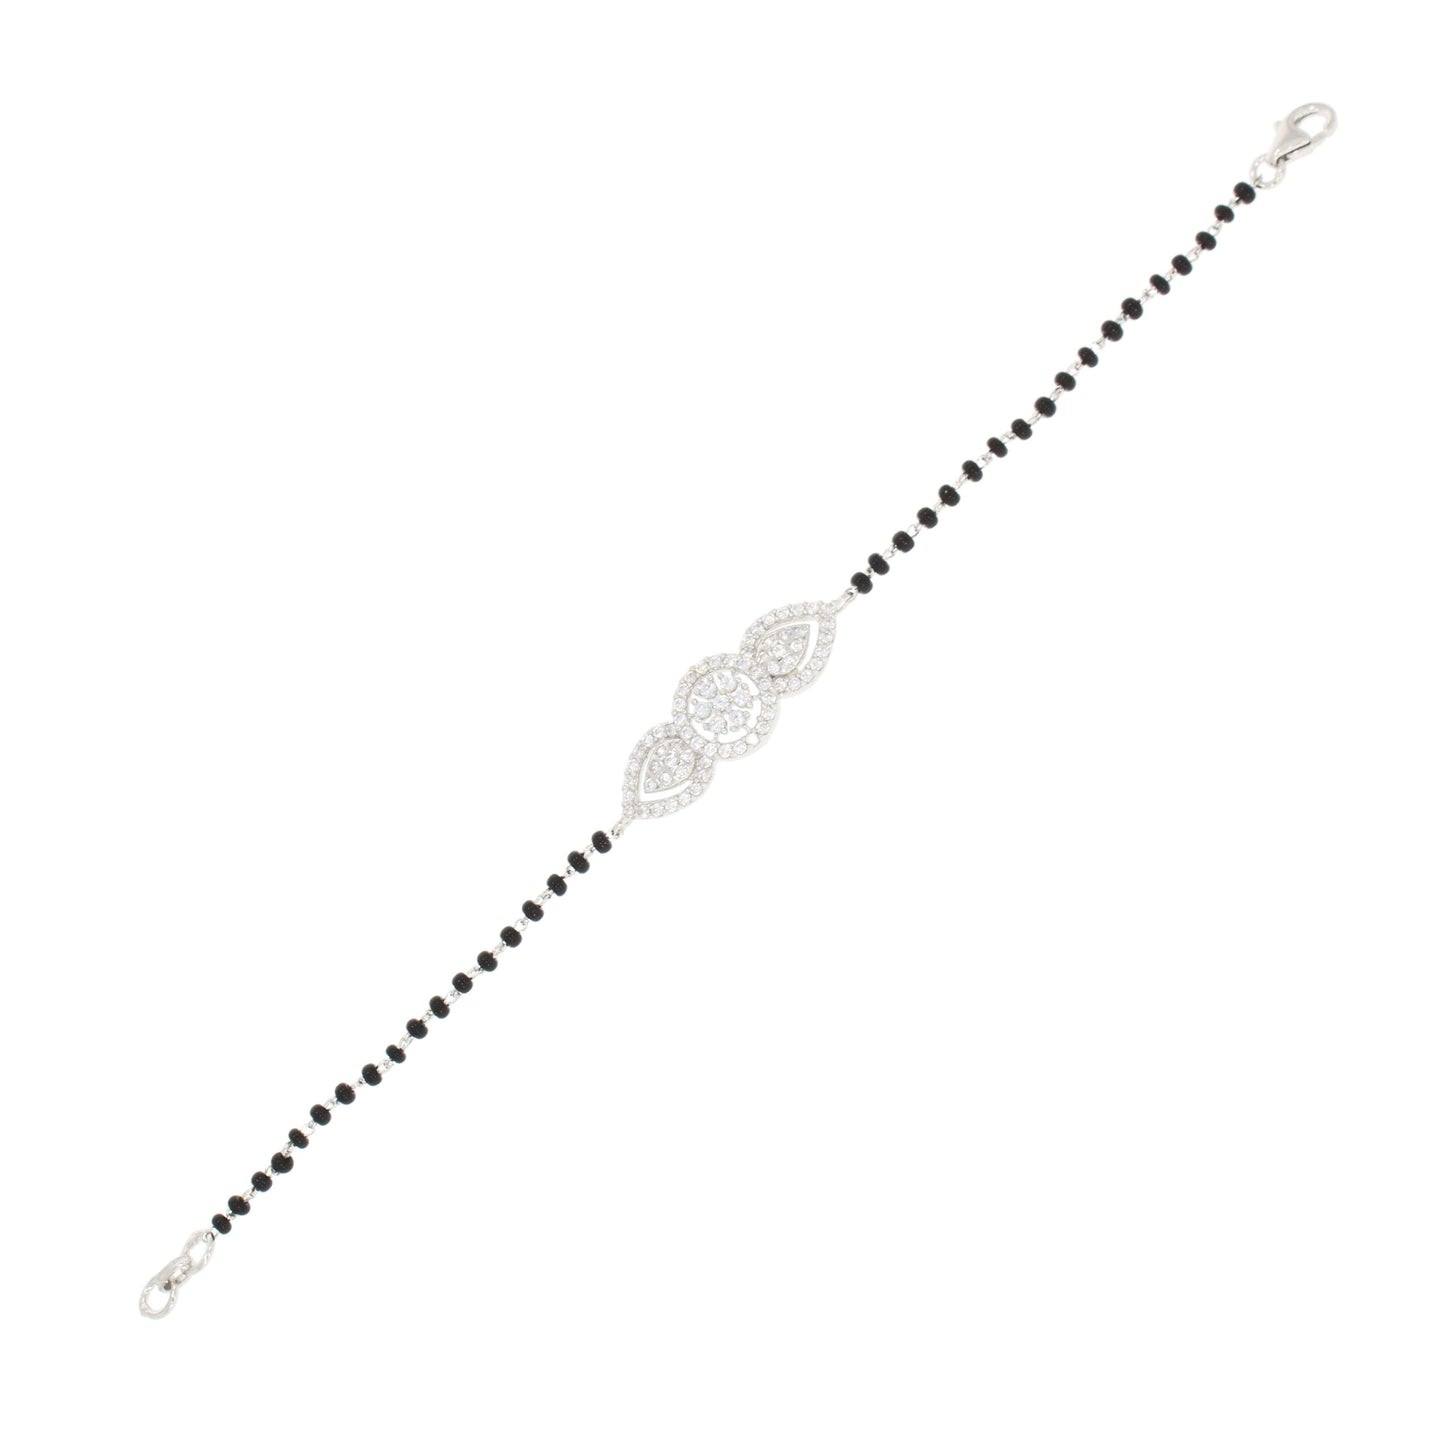 Black Beads Bracelet In Silver